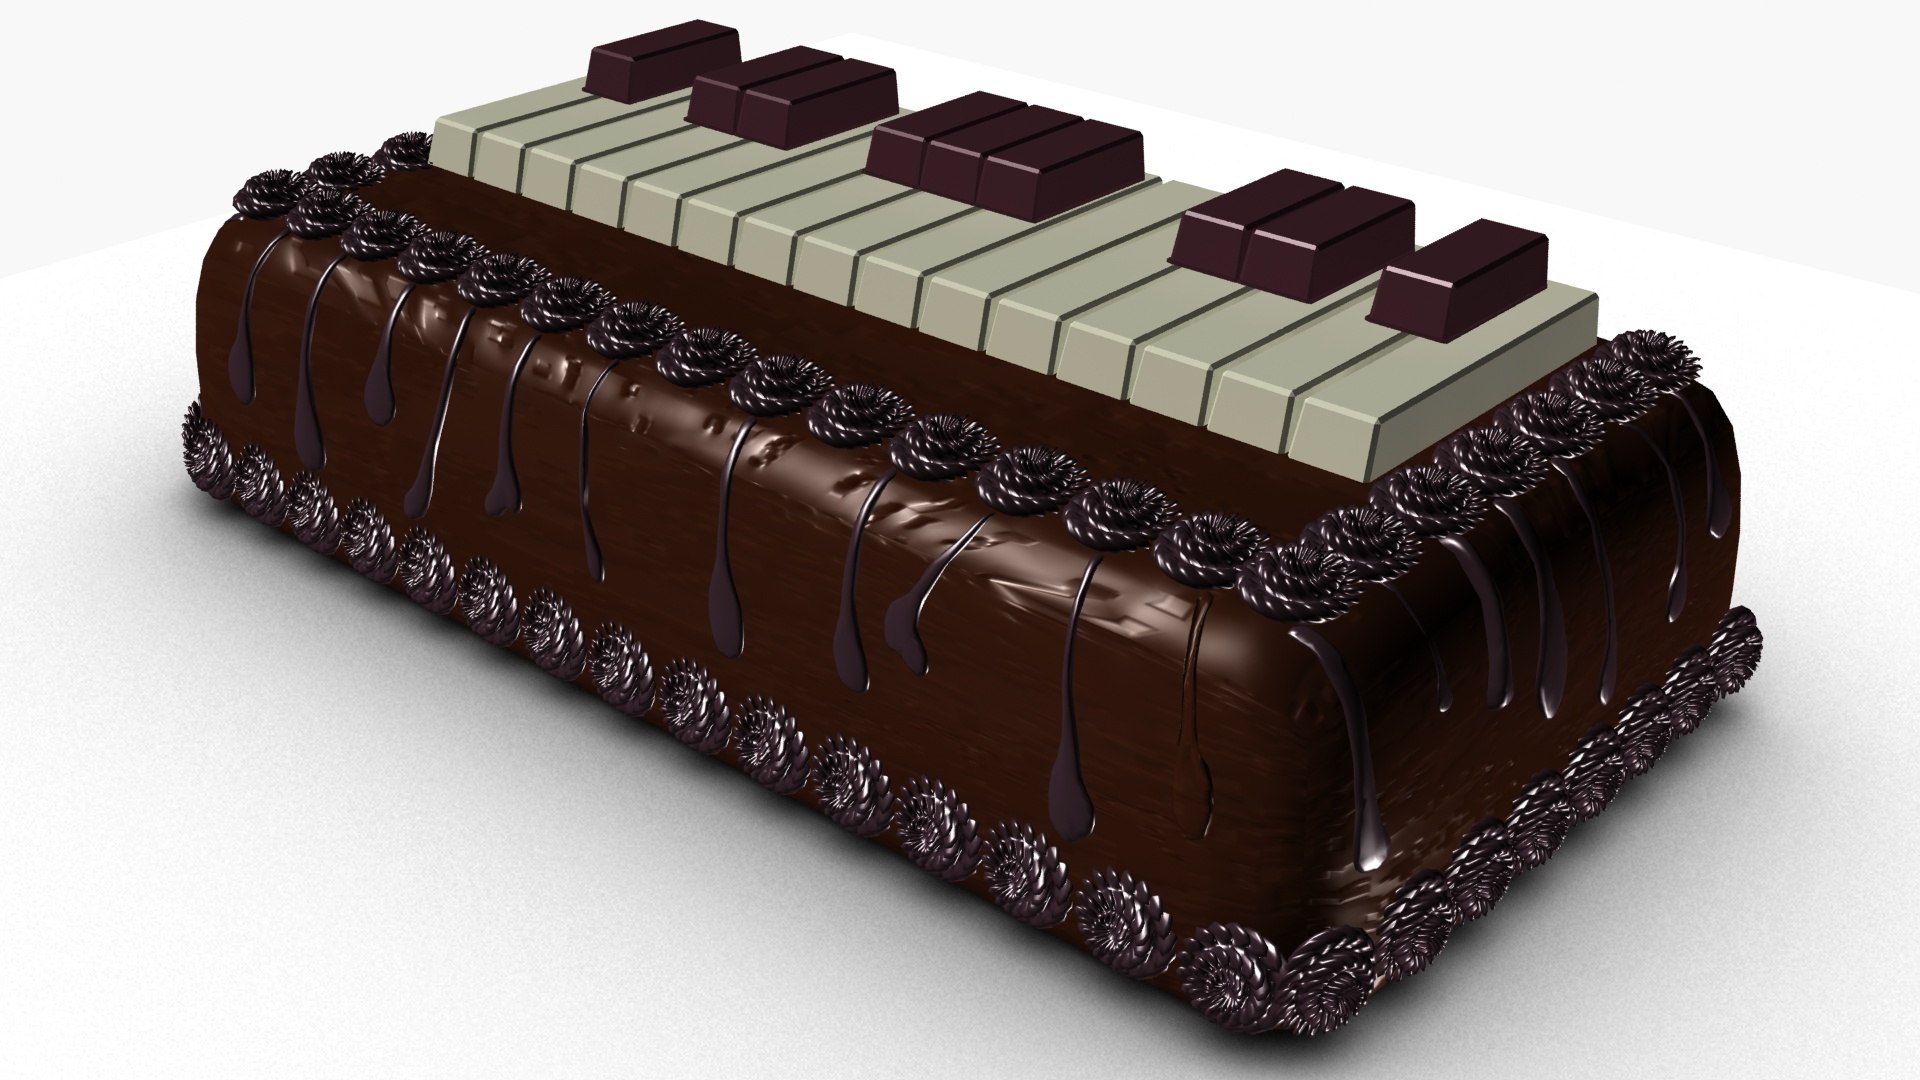 Piano Cake 3